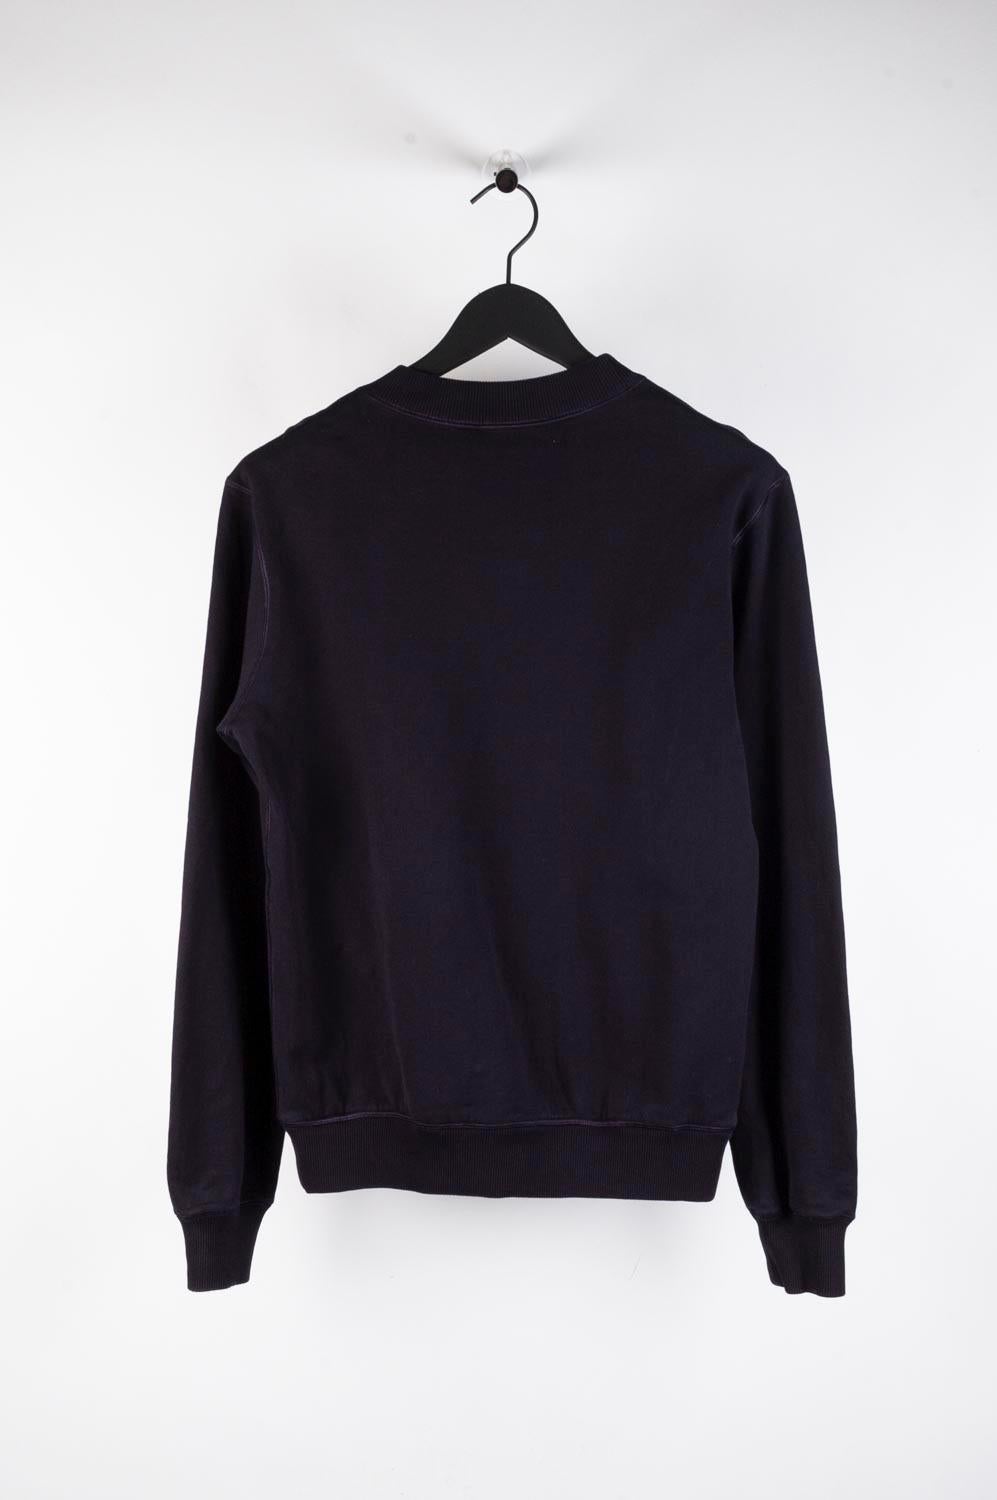 New Dolce&Gabbana Men Sweatshirt Jumper Pullover Red Cross, Size 46IT (S/M) S444 For Sale 1